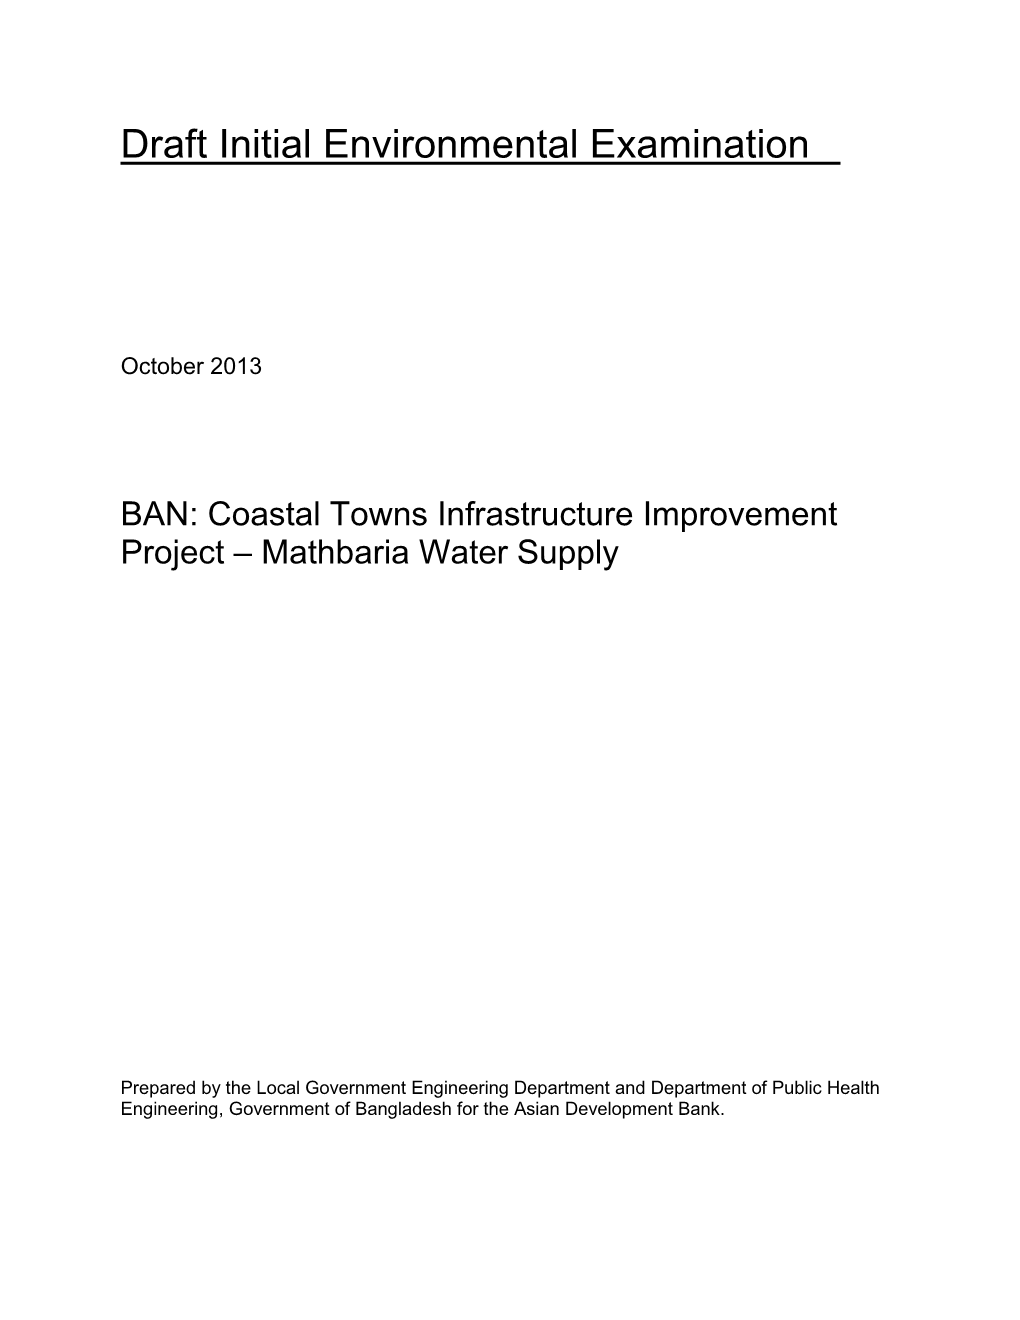 BAN: Coastal Towns Infrastructure Improvement Project – Mathbaria Water Supply